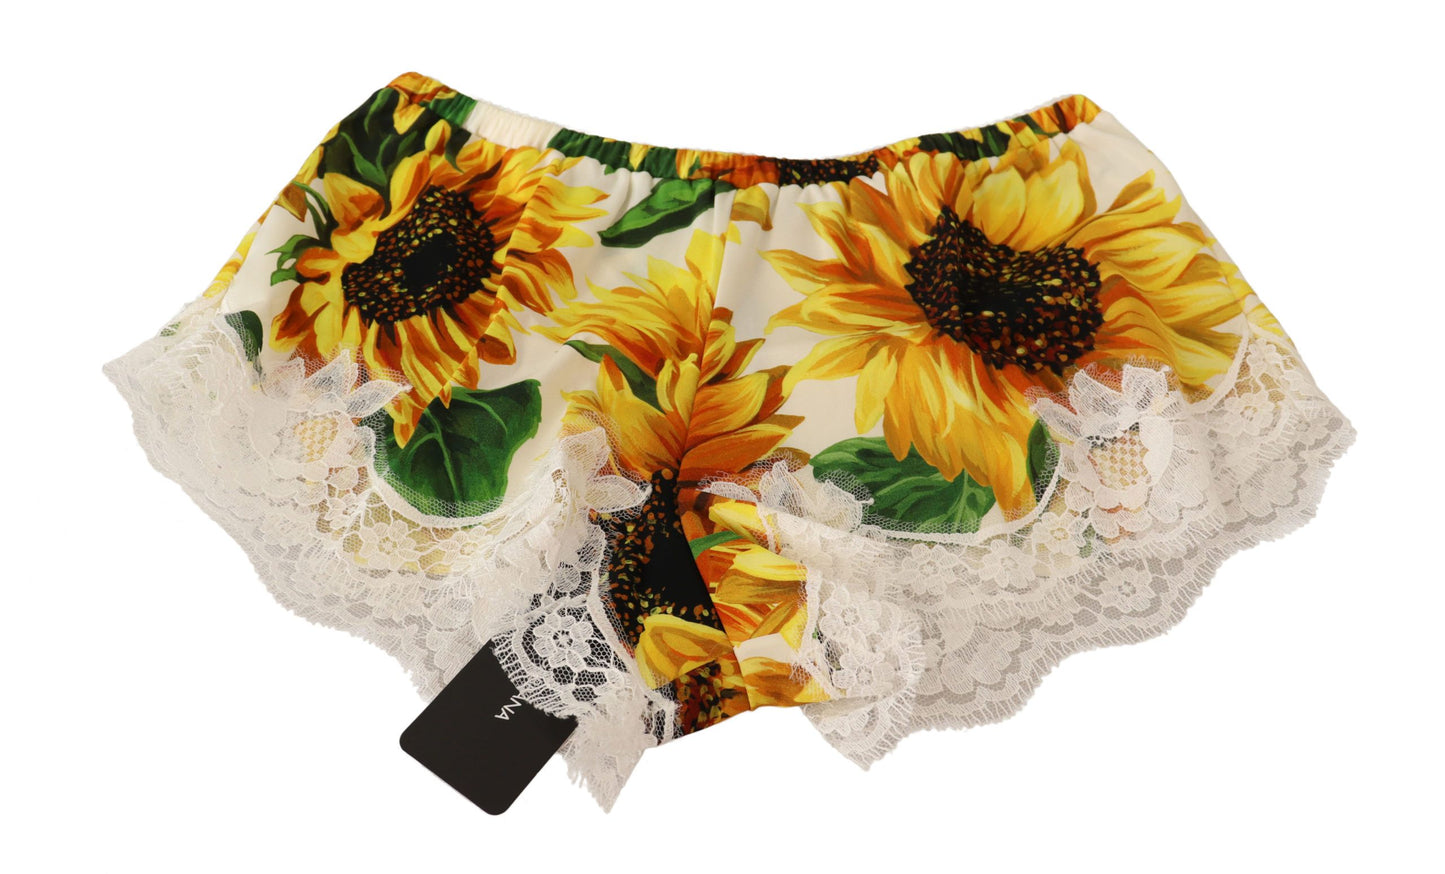 Sunflower Lace Lingerie Shorts - Silk Blend